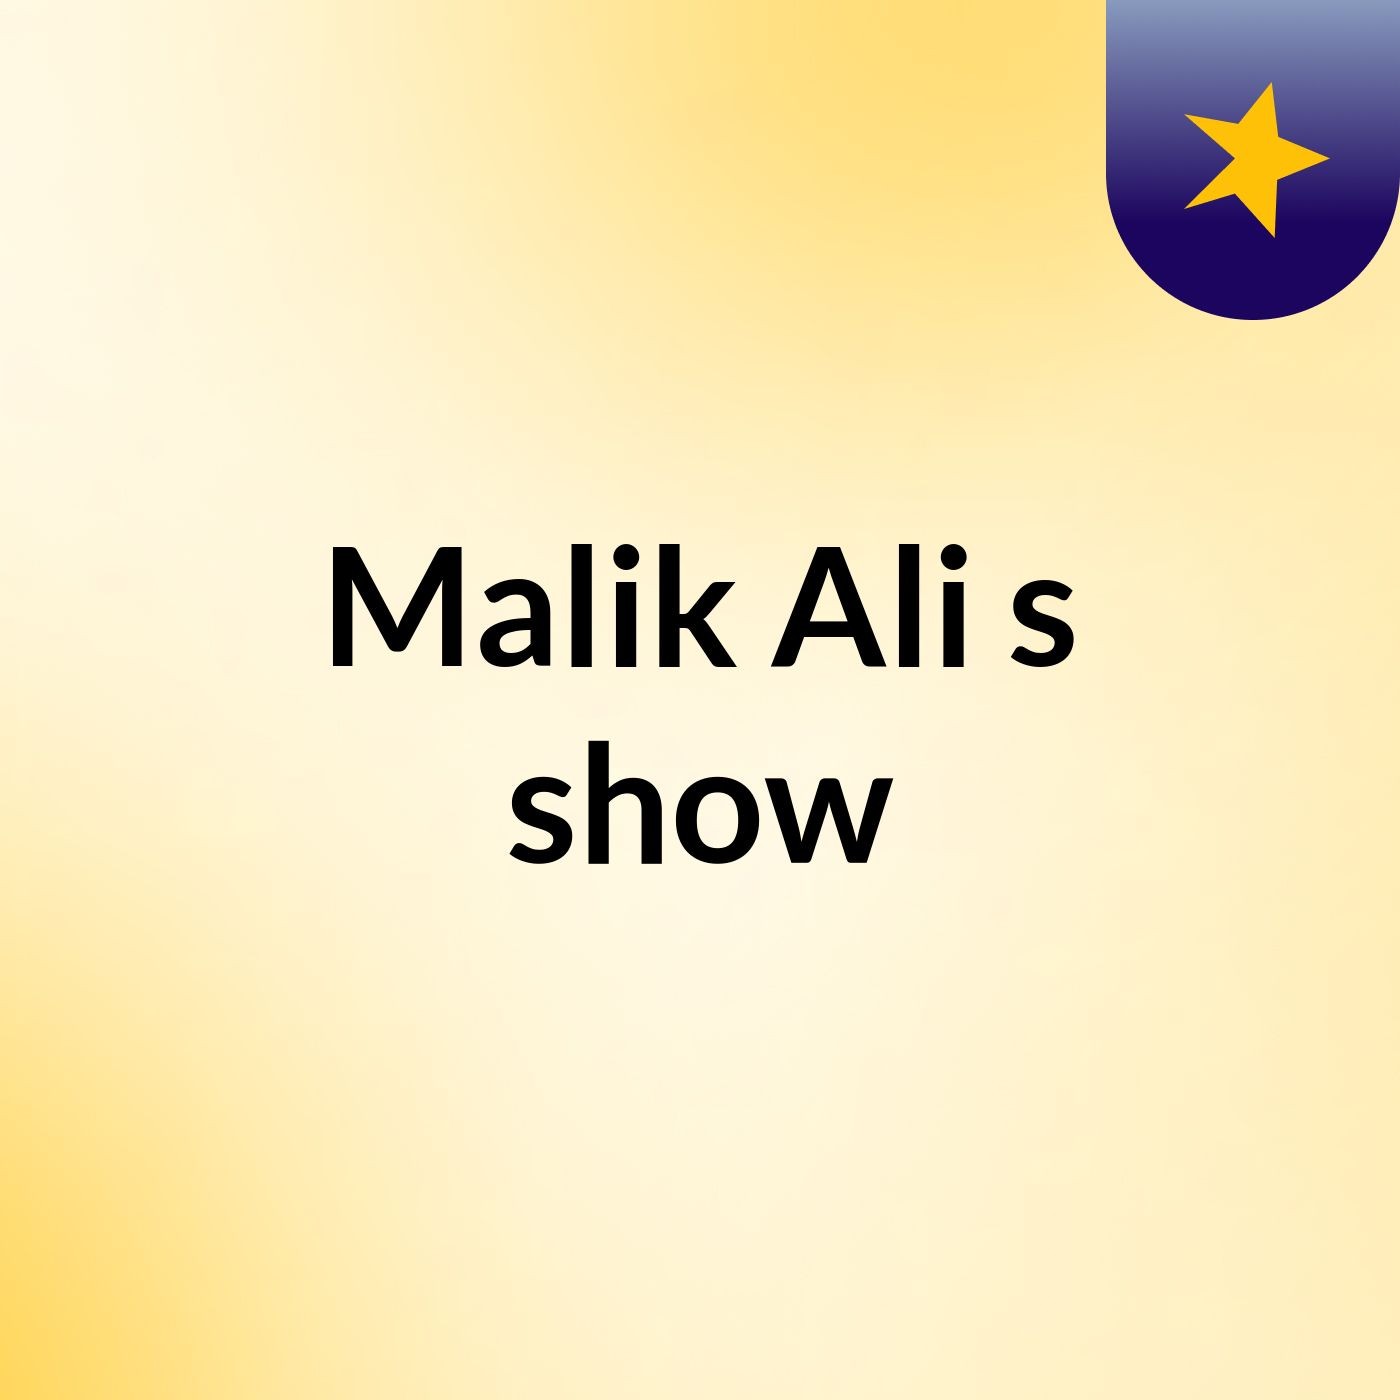 Malik Ali's show